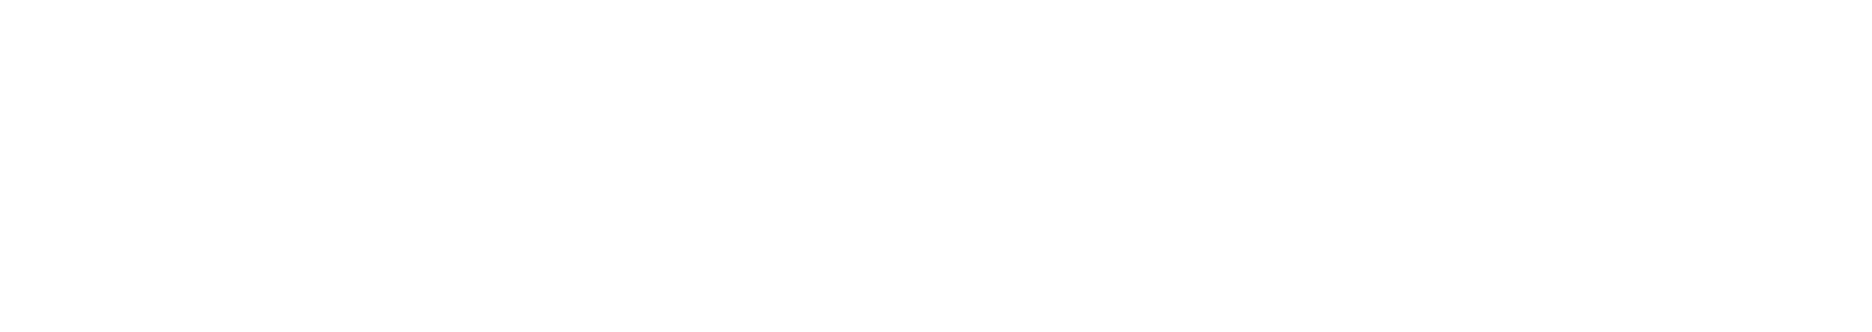 Markenlogo Werdauer Reloaded Bordell Berlin